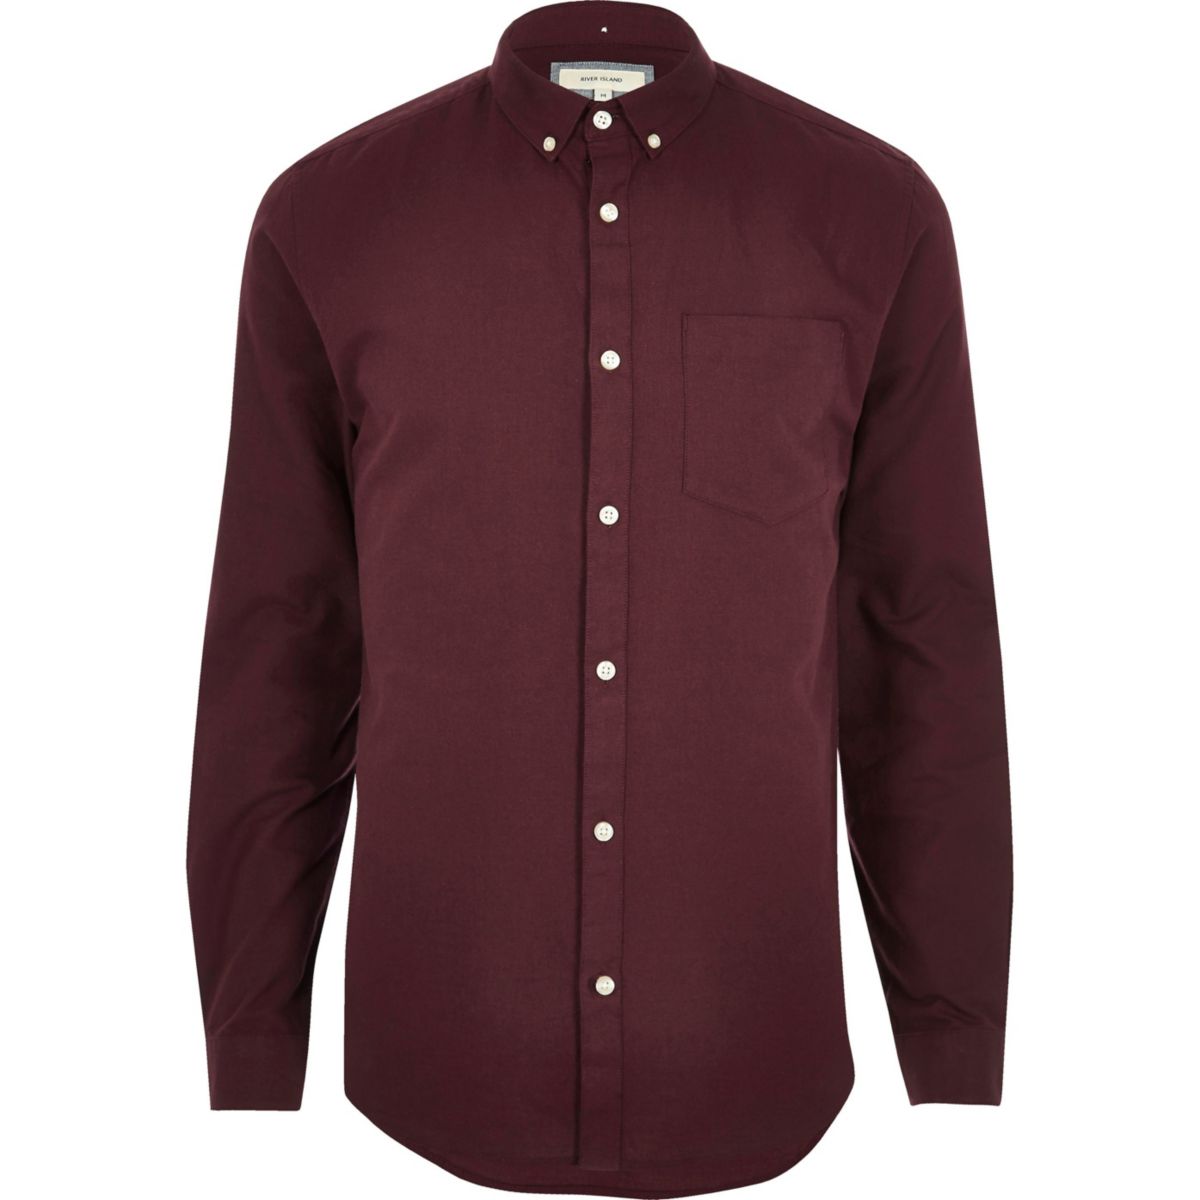 Burgundy slim fit button-down Oxford shirt - Shirts - Sale - men